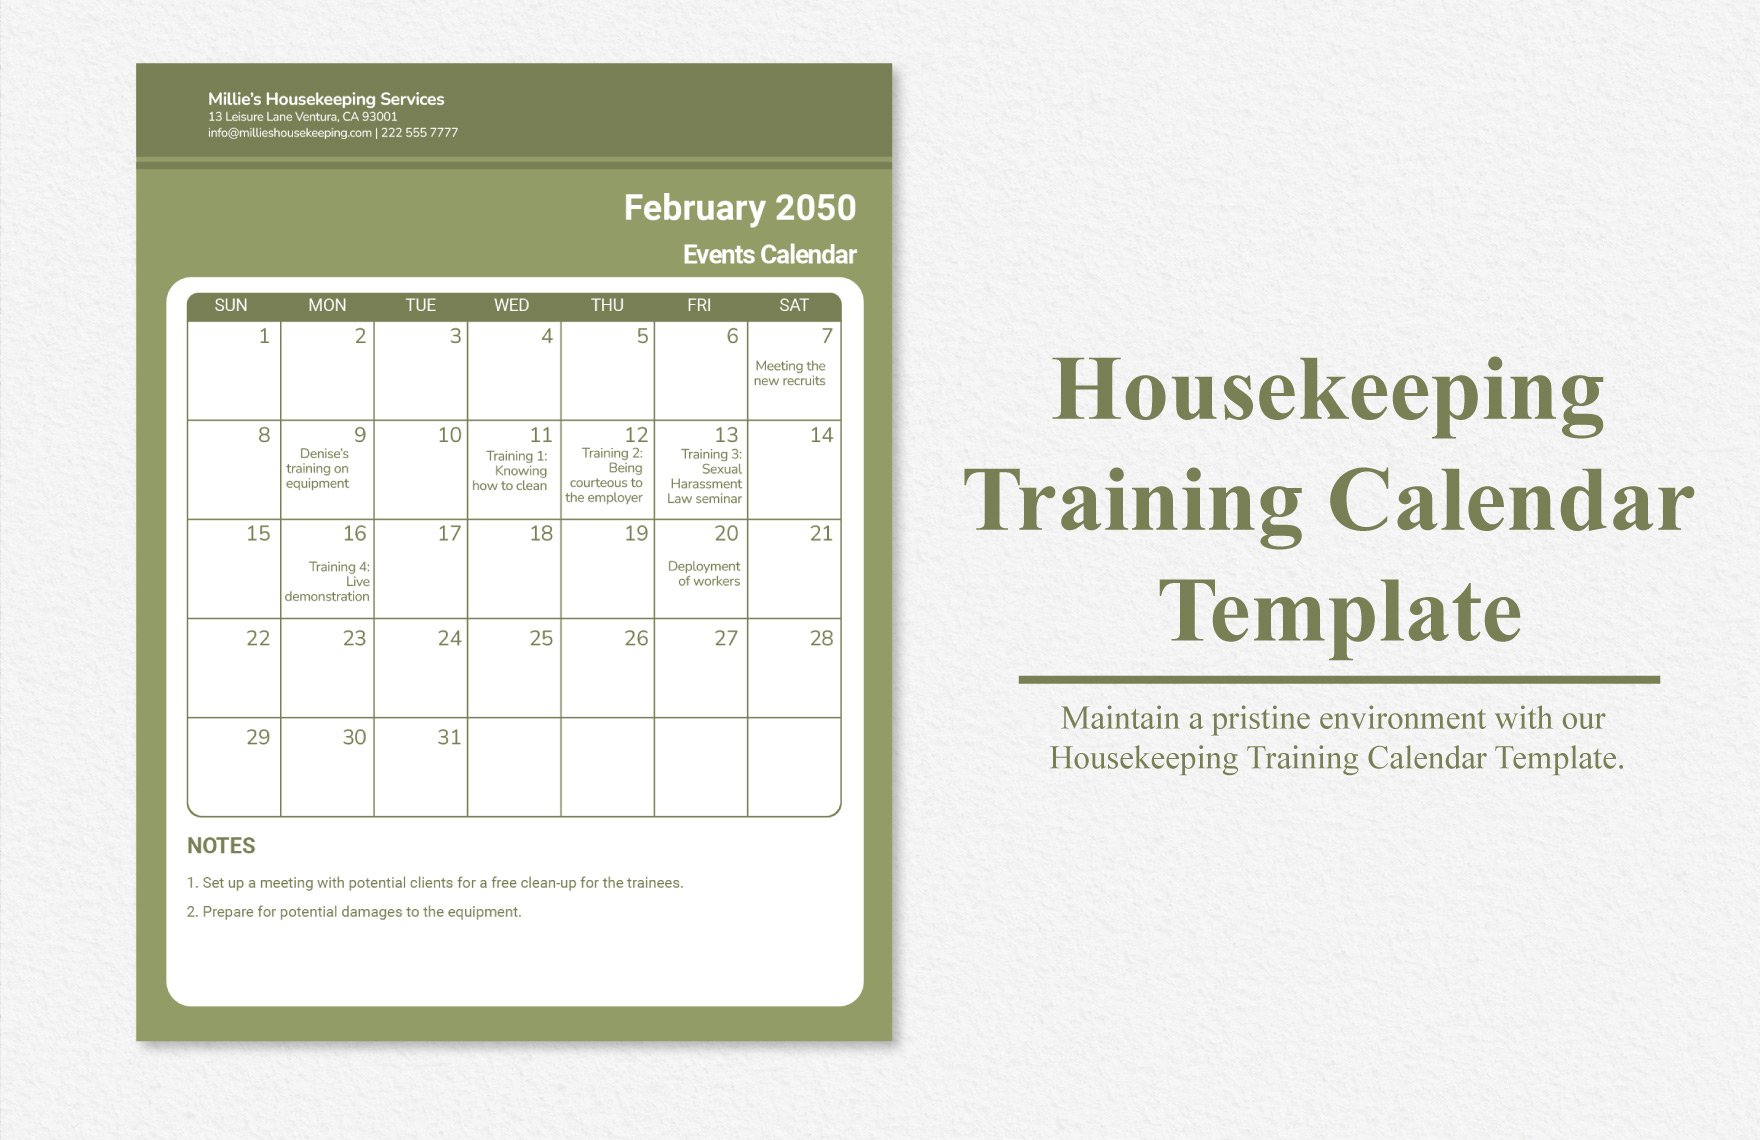 Housekeeping Training Calendar Template